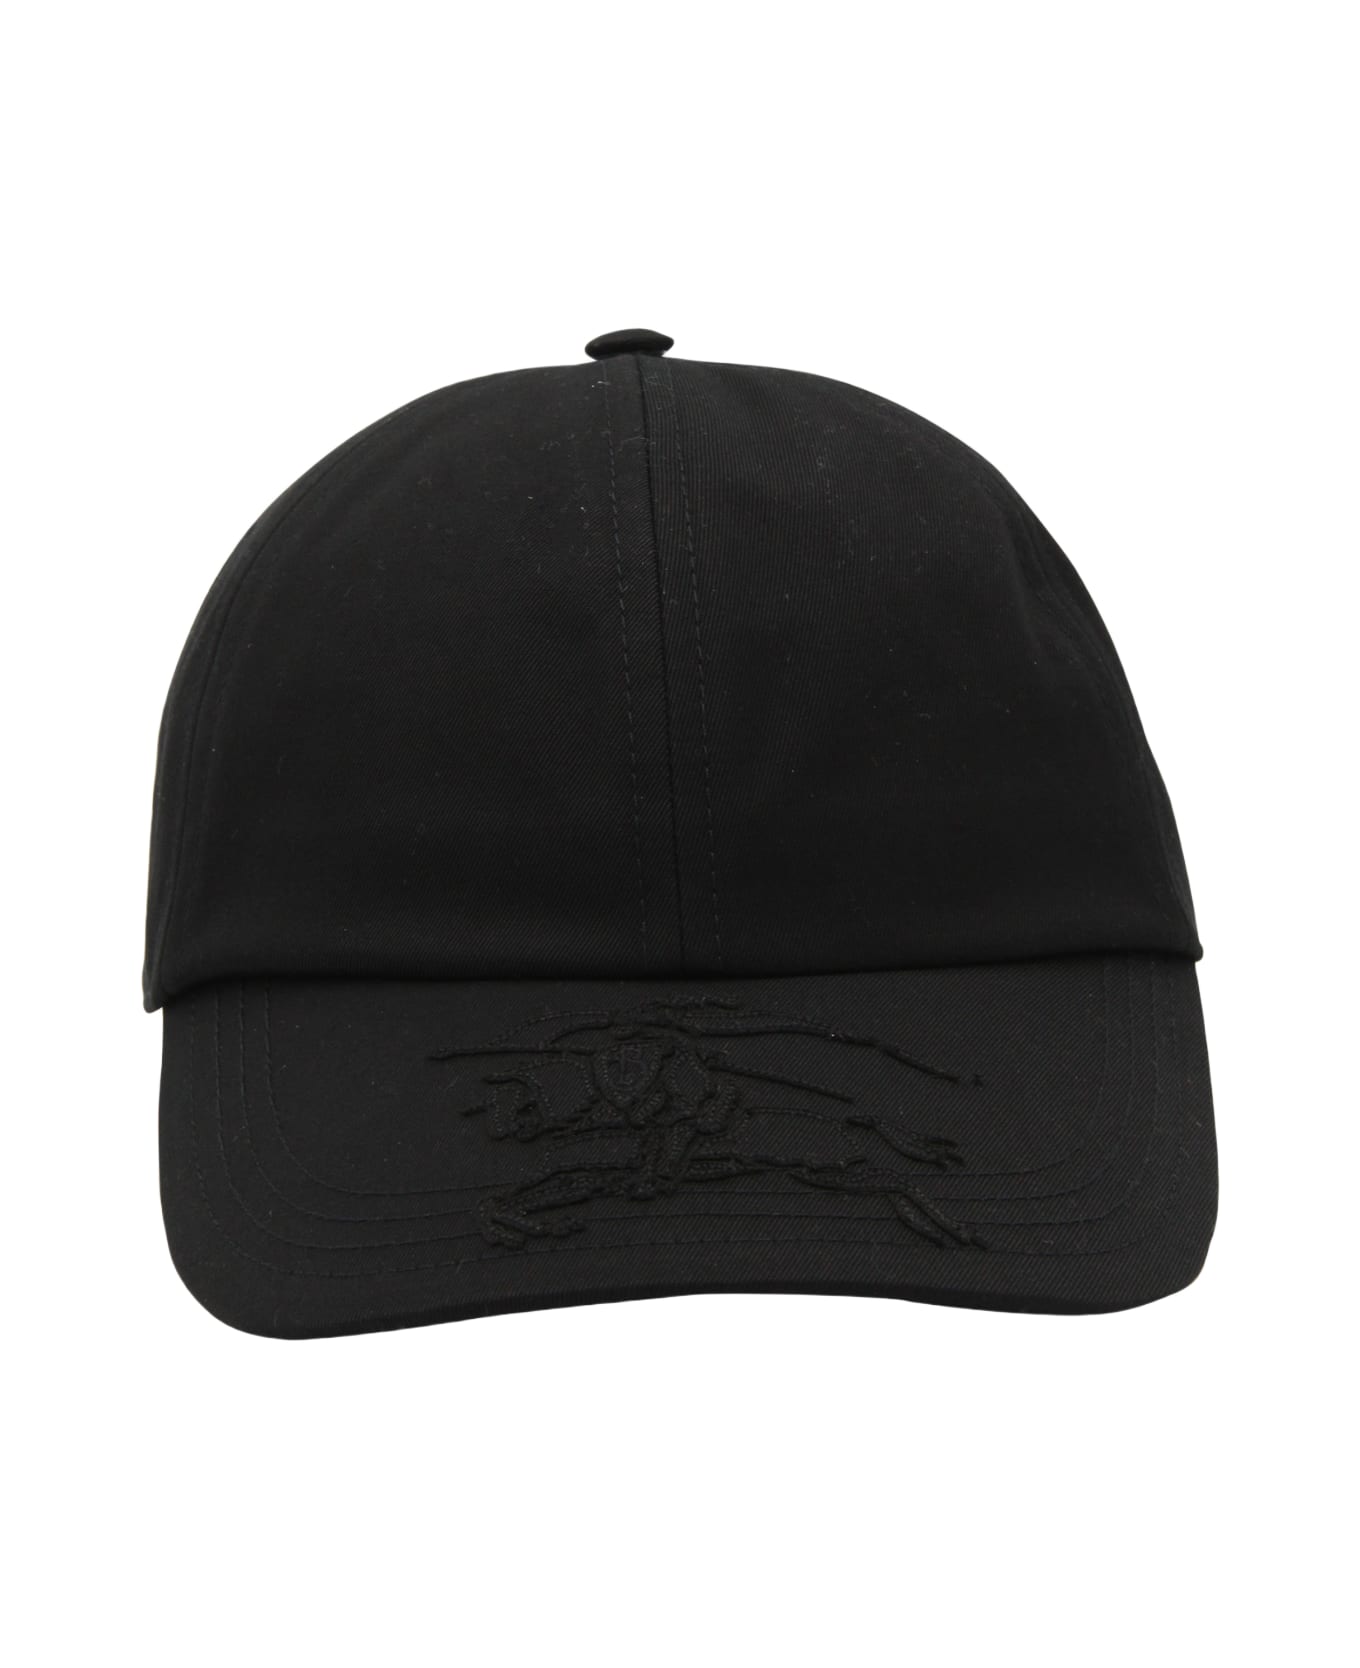 Burberry Black Cotton Blend Baseball Cap - Black 帽子